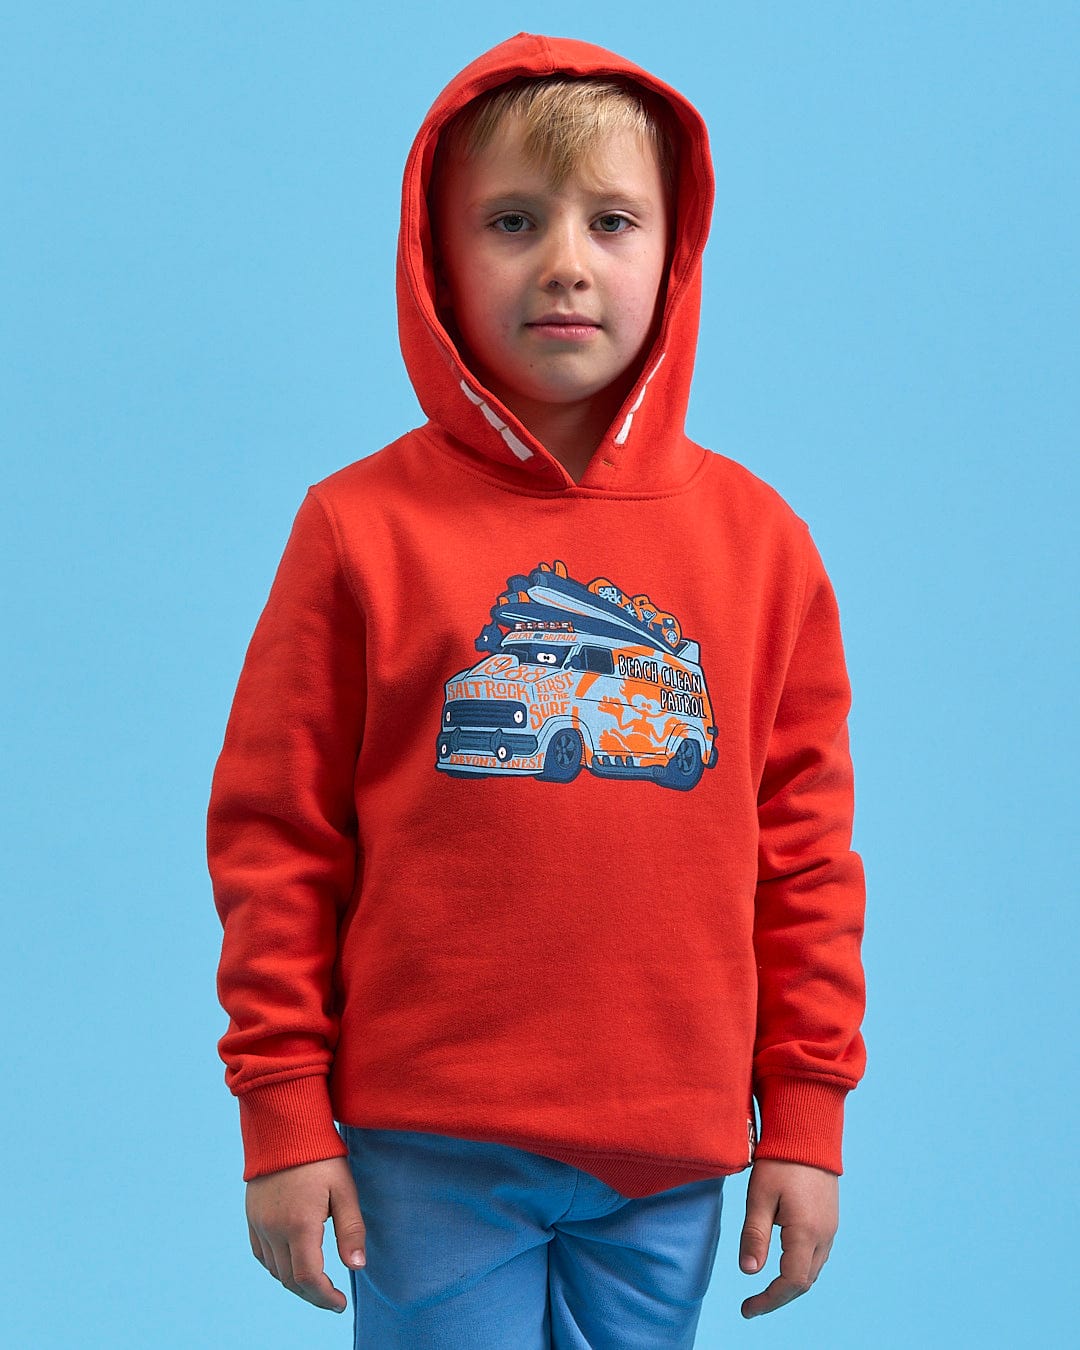 A young boy wearing a Saltrock Beach Patrol - Kids Pop Hoodie - Red with a van on it.